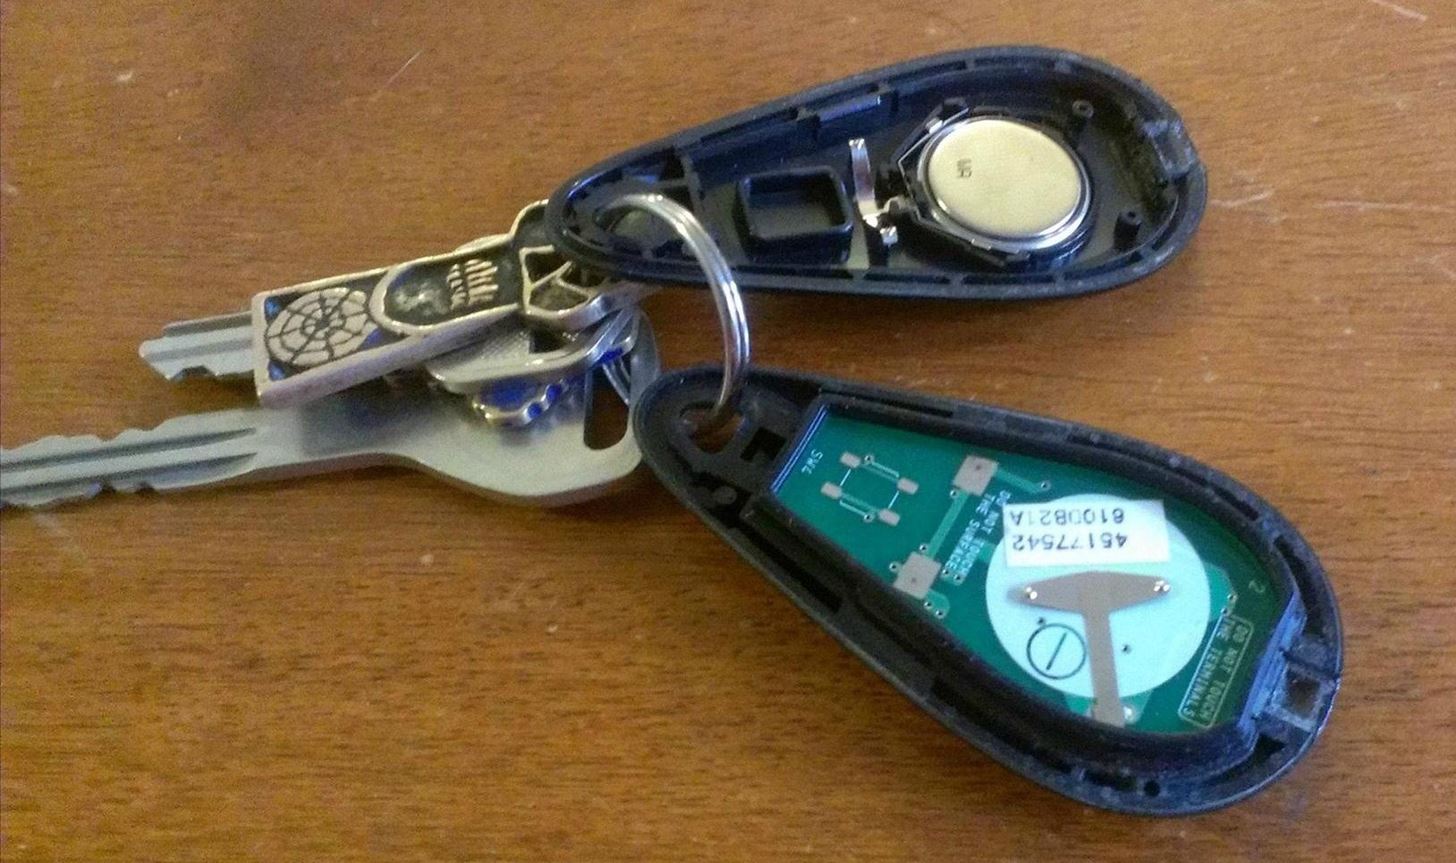 2007 camry keyless entry battery